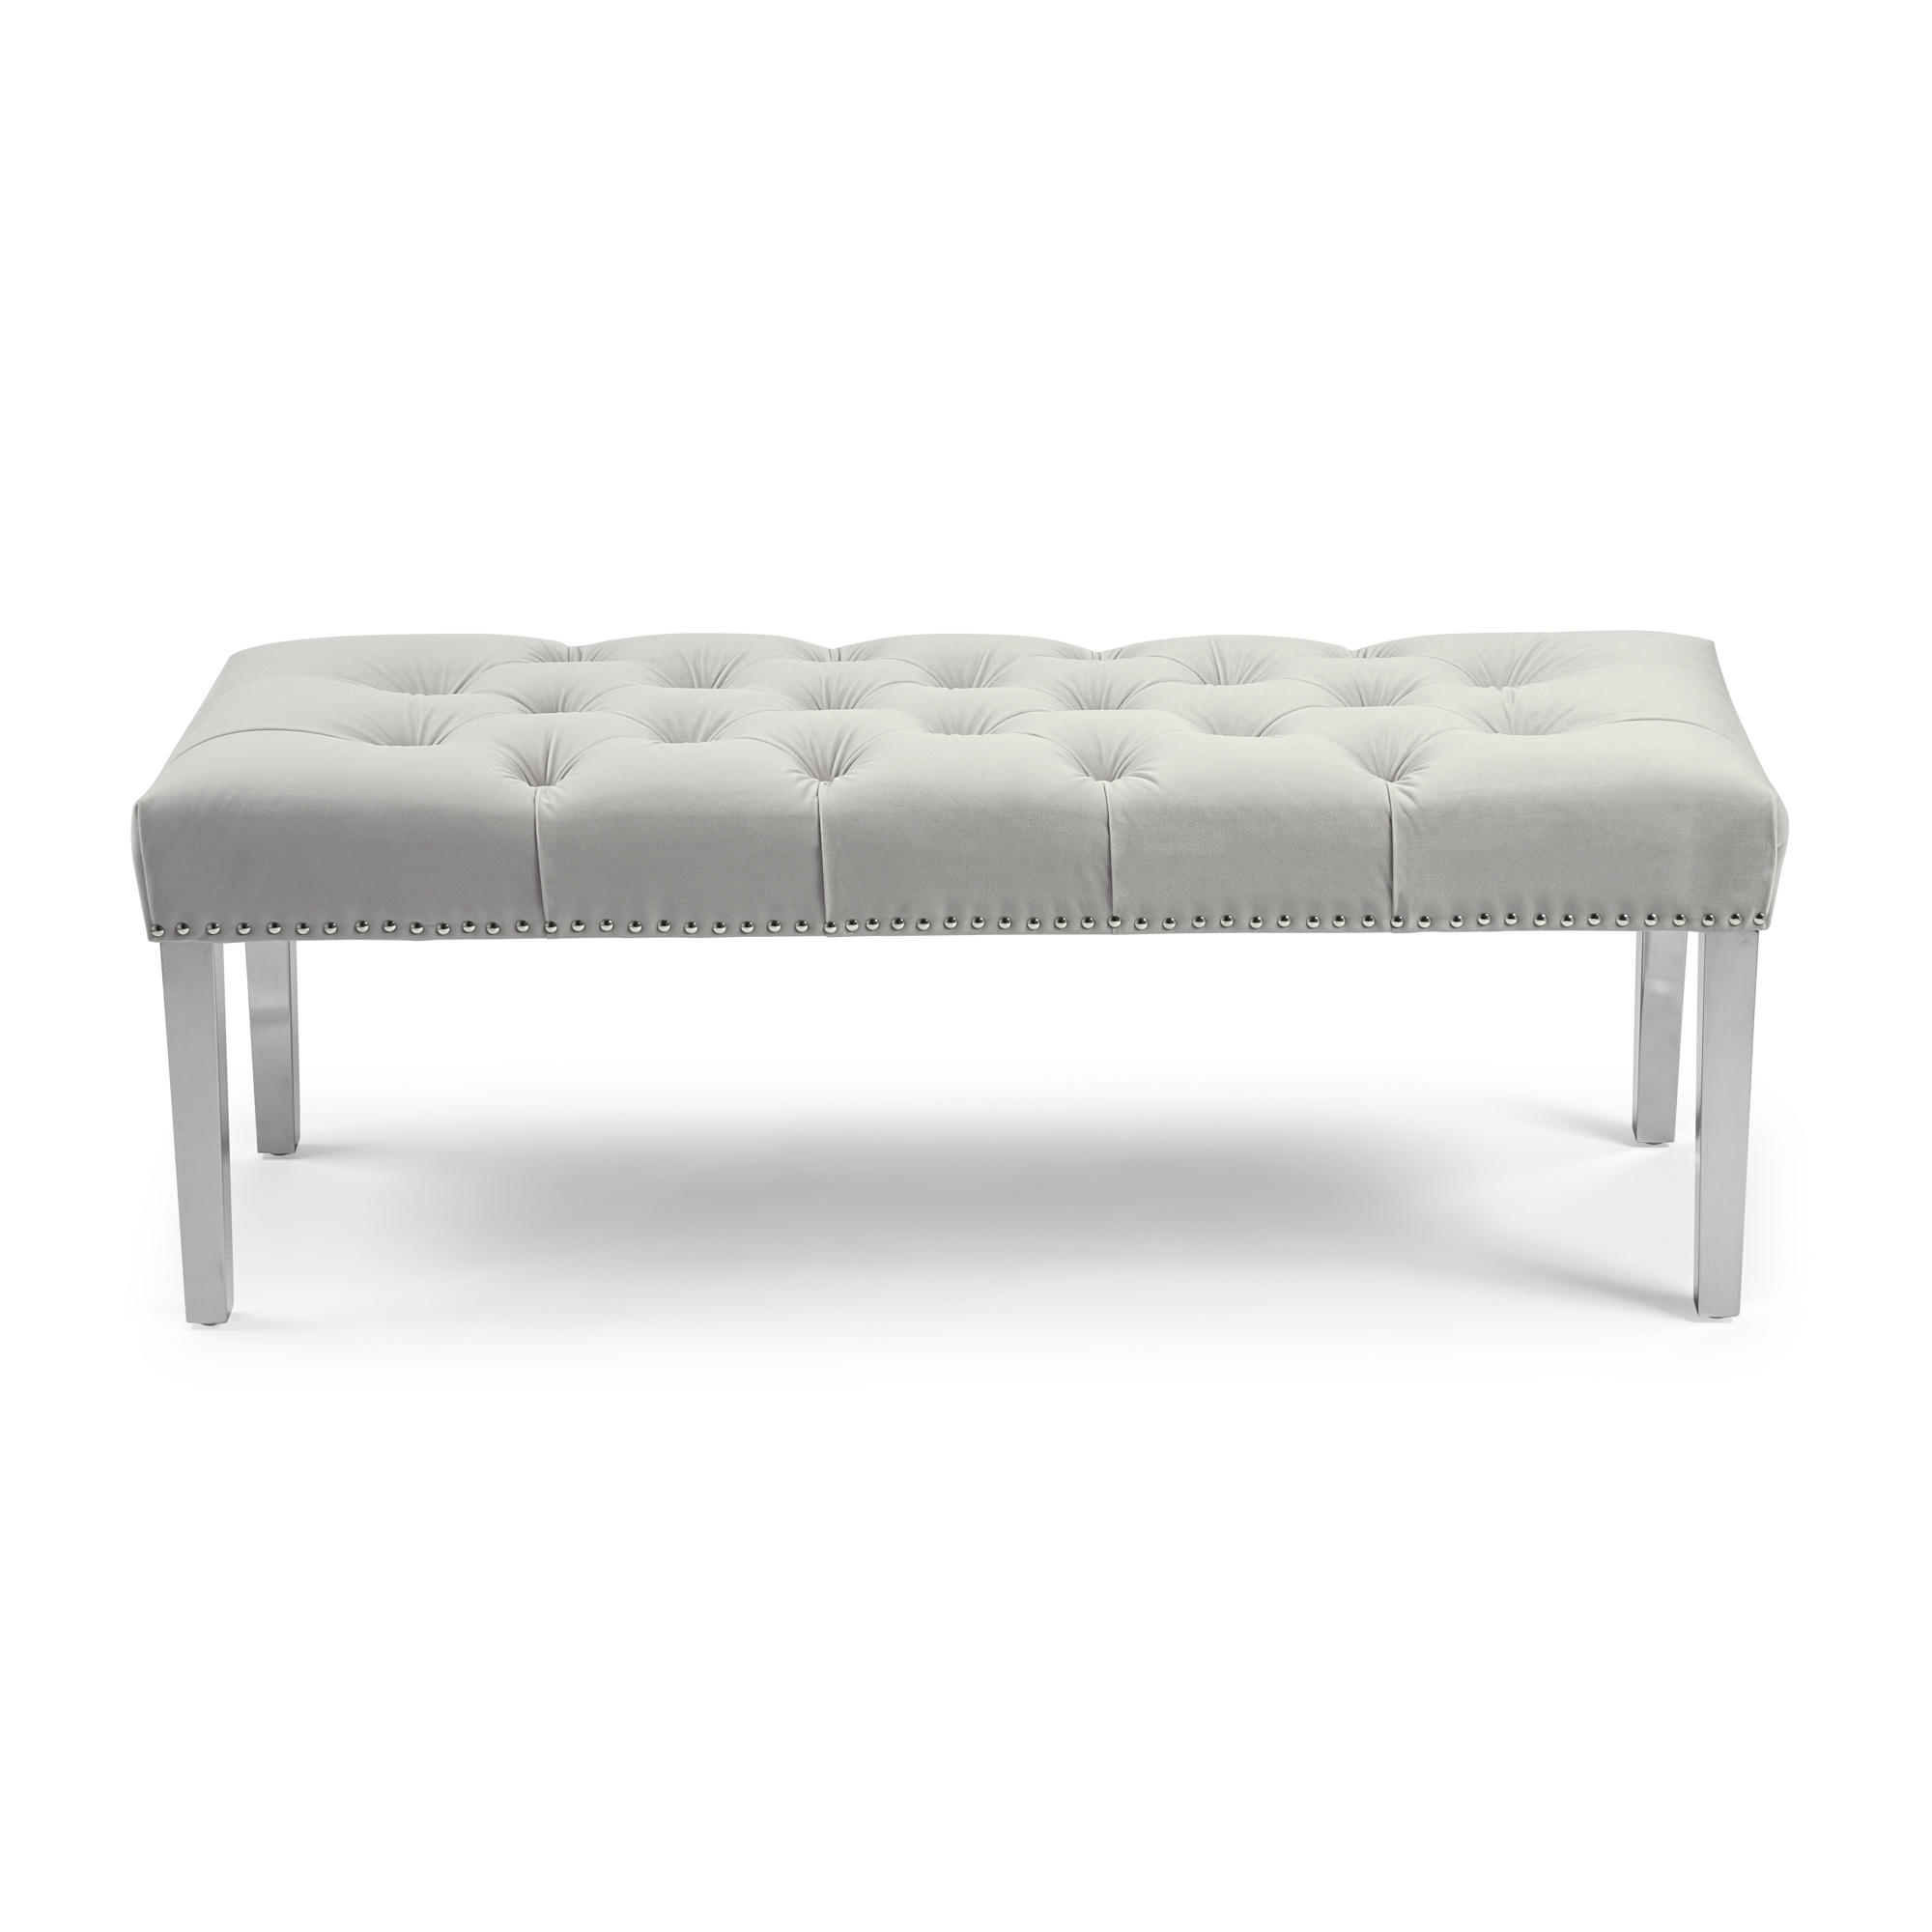 Richmond Upholstered Dove Grey Tiffany Velvet Dining Bench – Steel Legs